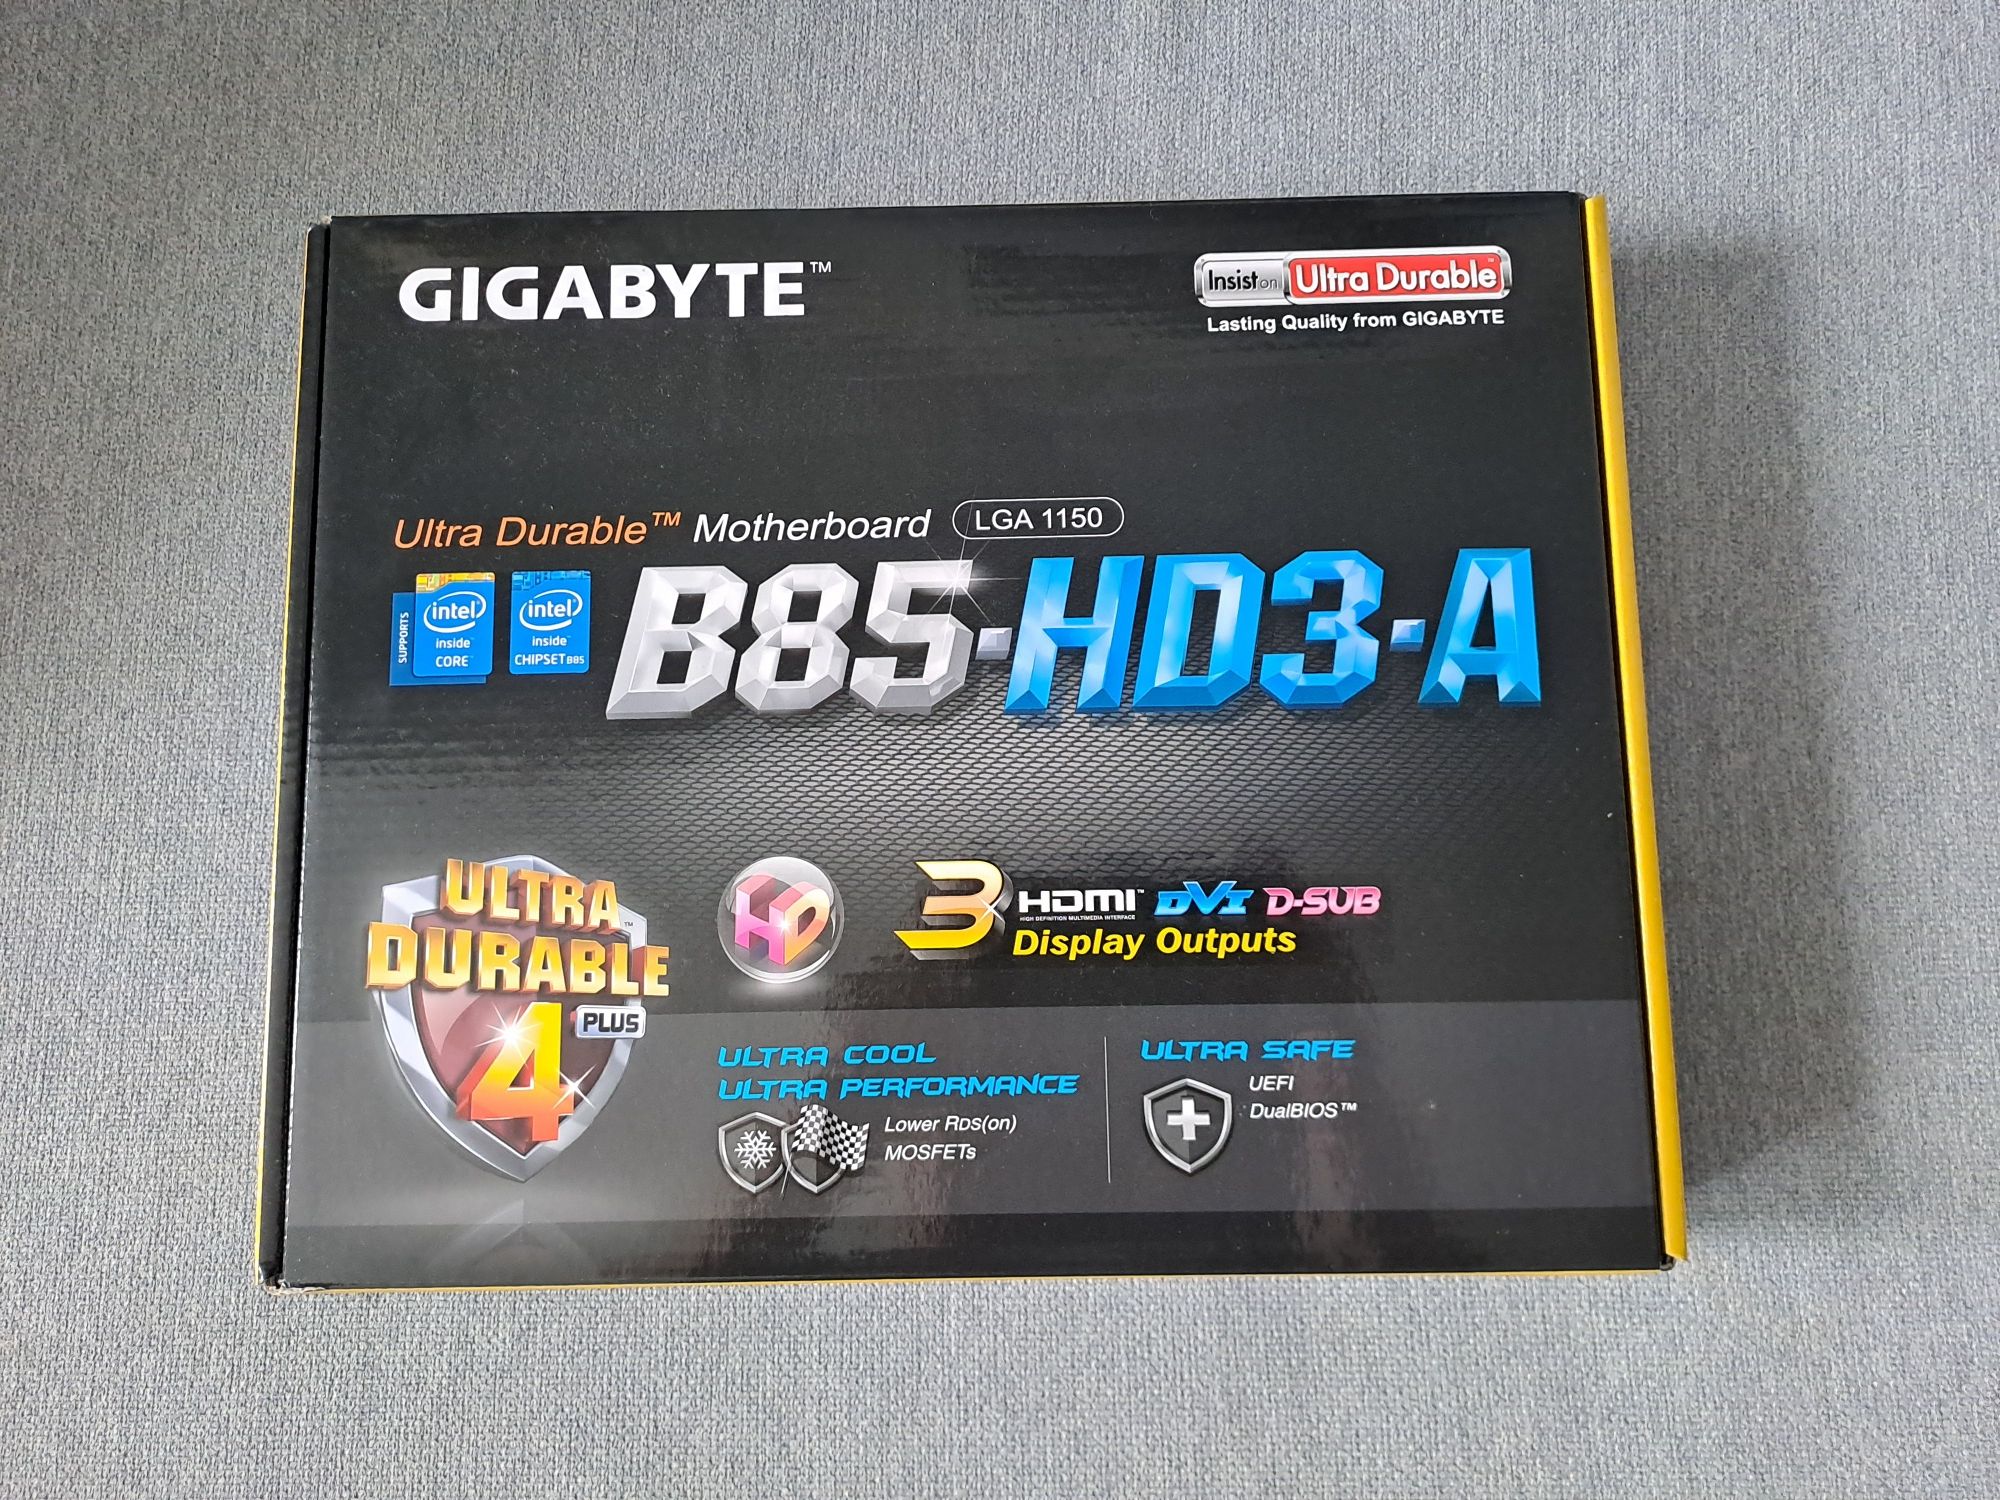 Płyta główna Gigabite GA-B85-HD3 + i5-4460 + 4x4 GB DDR3 + karta USB